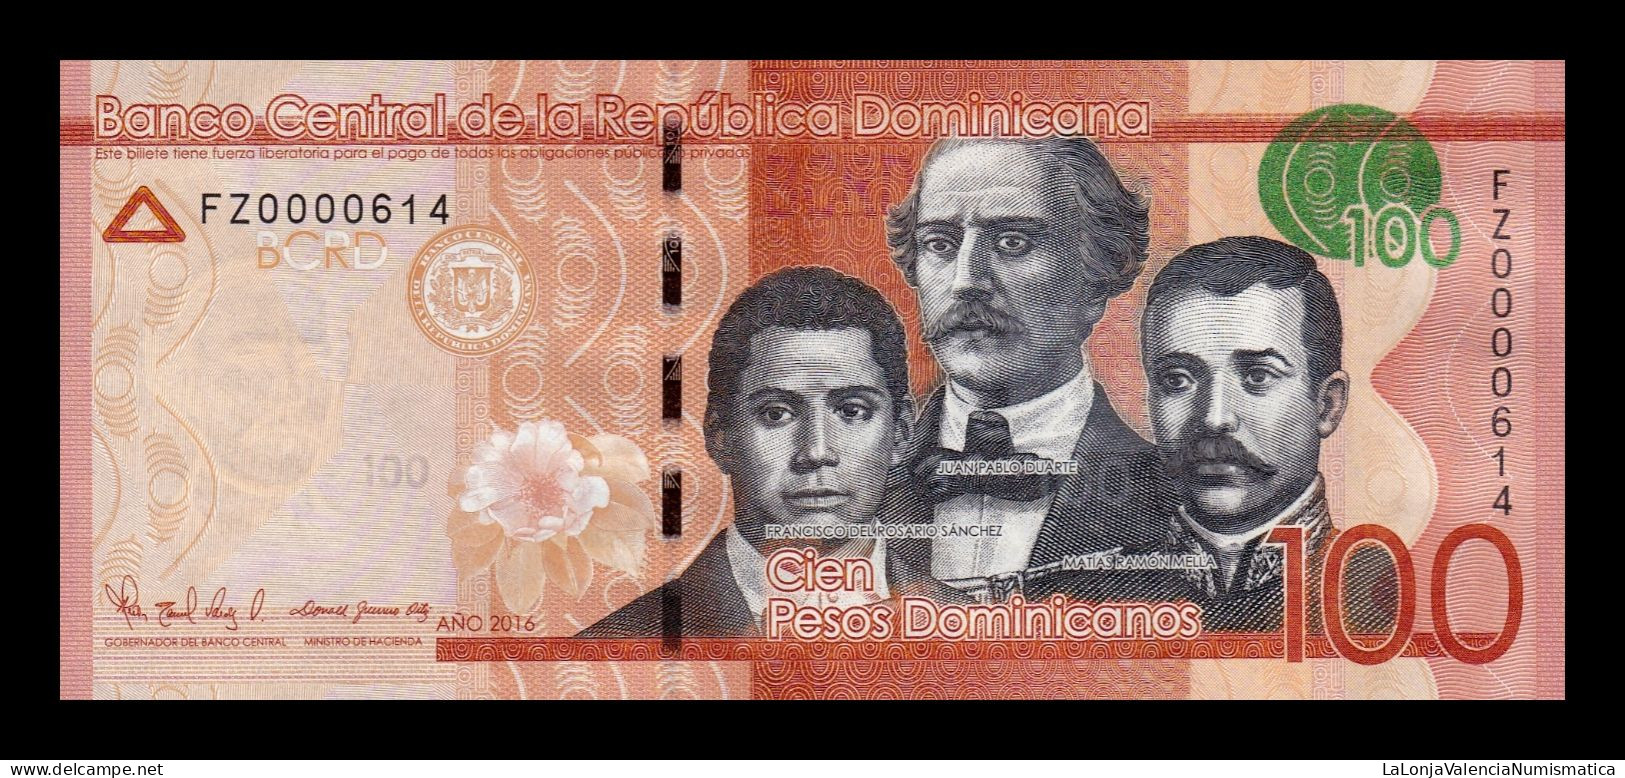 República Dominicana 100 Pesos Dominicanos 2016 Pick 190c Low Serial 614 Sc Unc - Dominicana